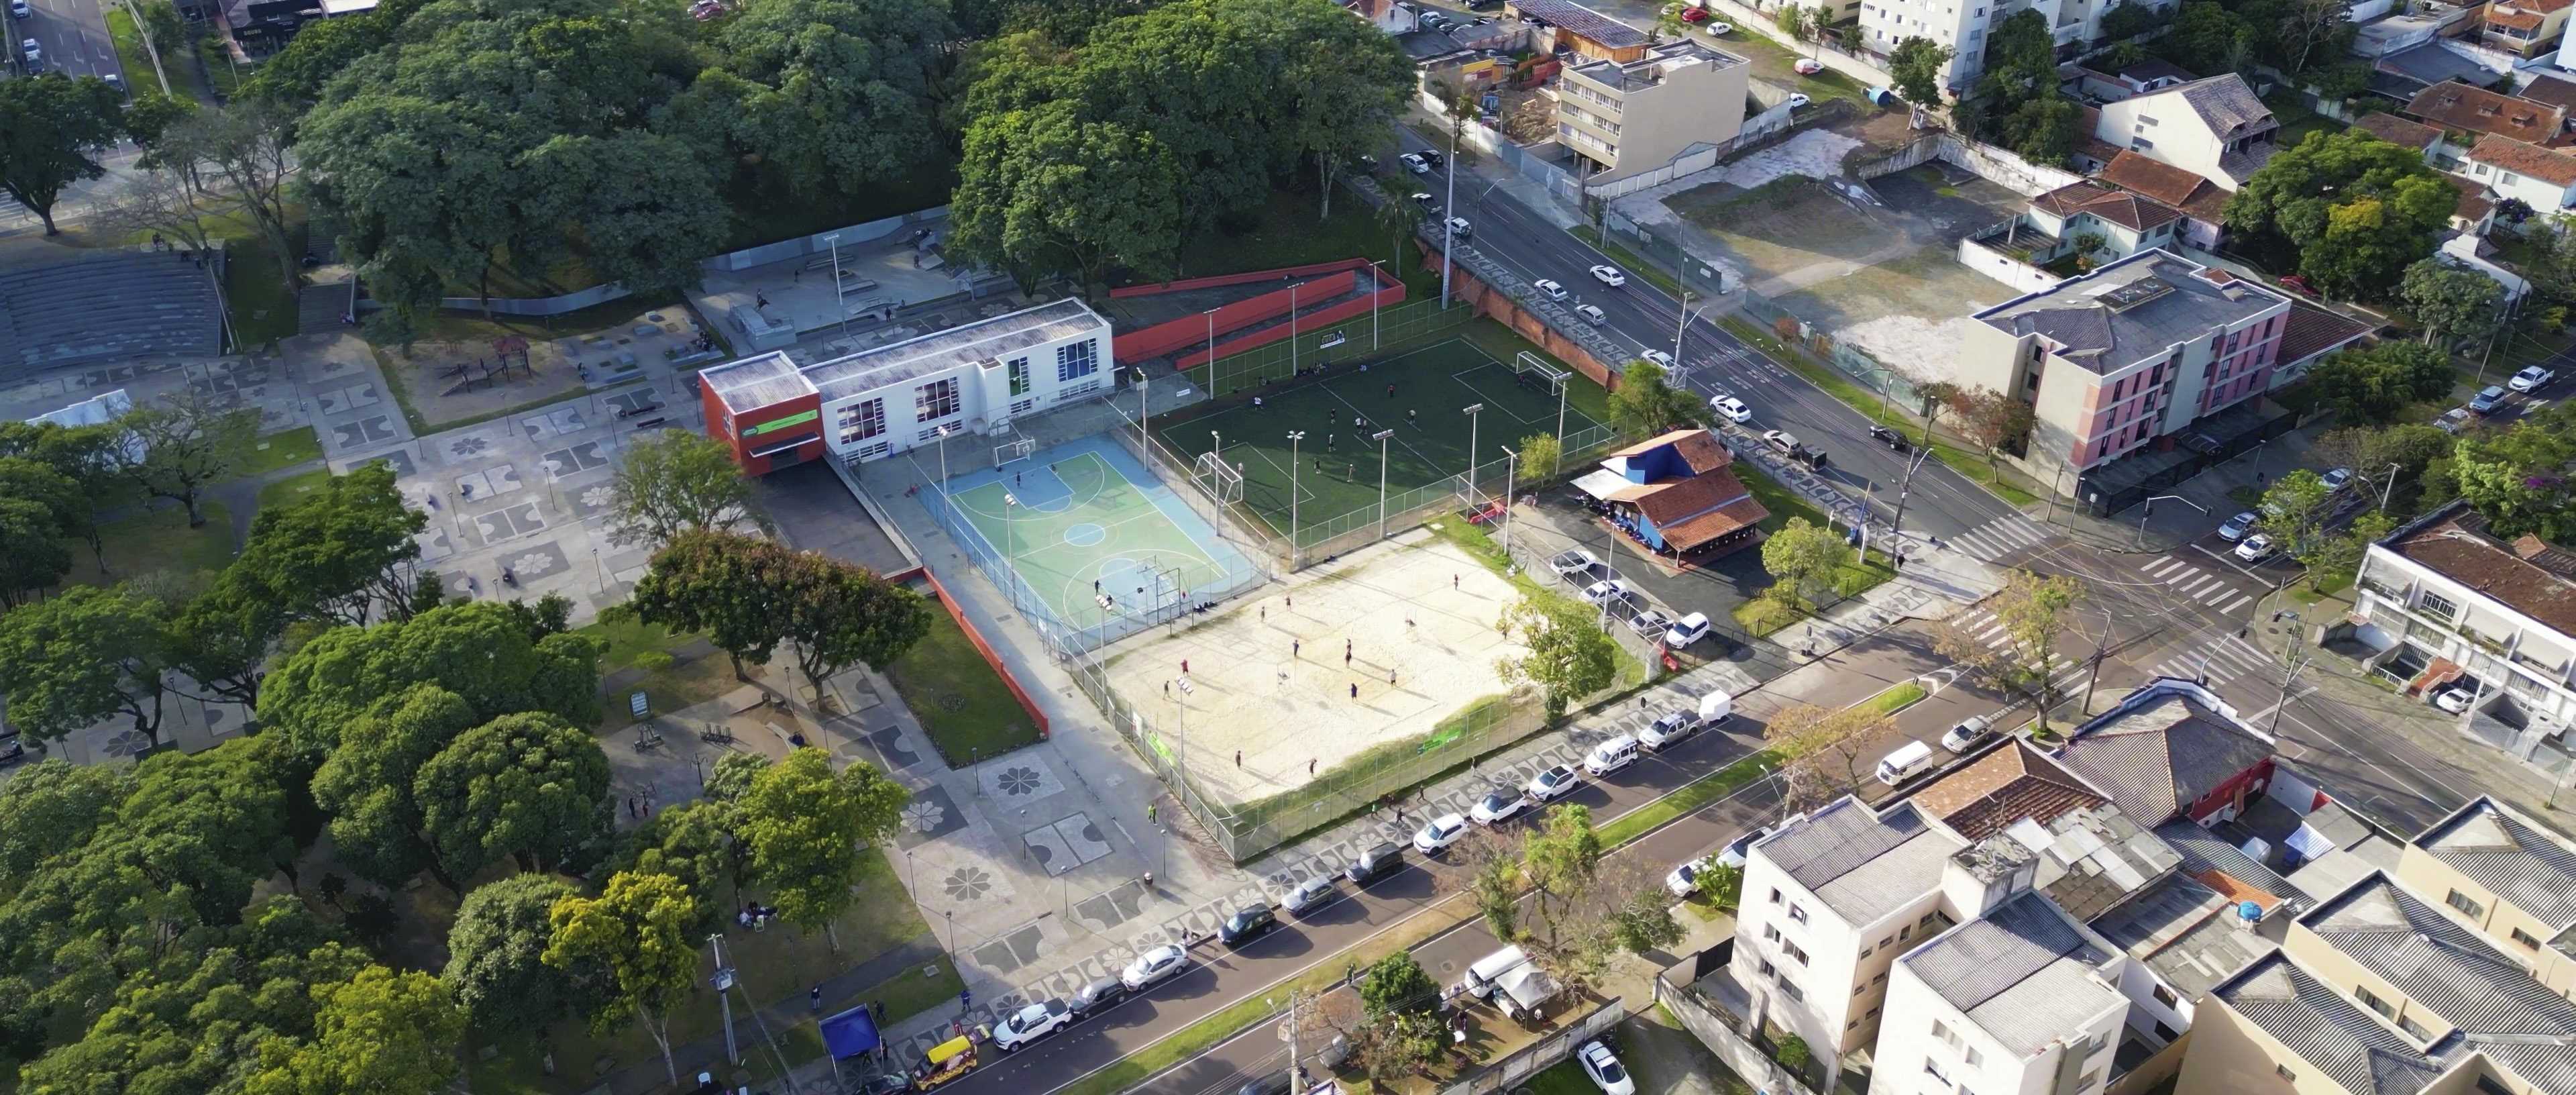 Treinamento Futebol Americano Feminino - Prefeitura de Curitiba